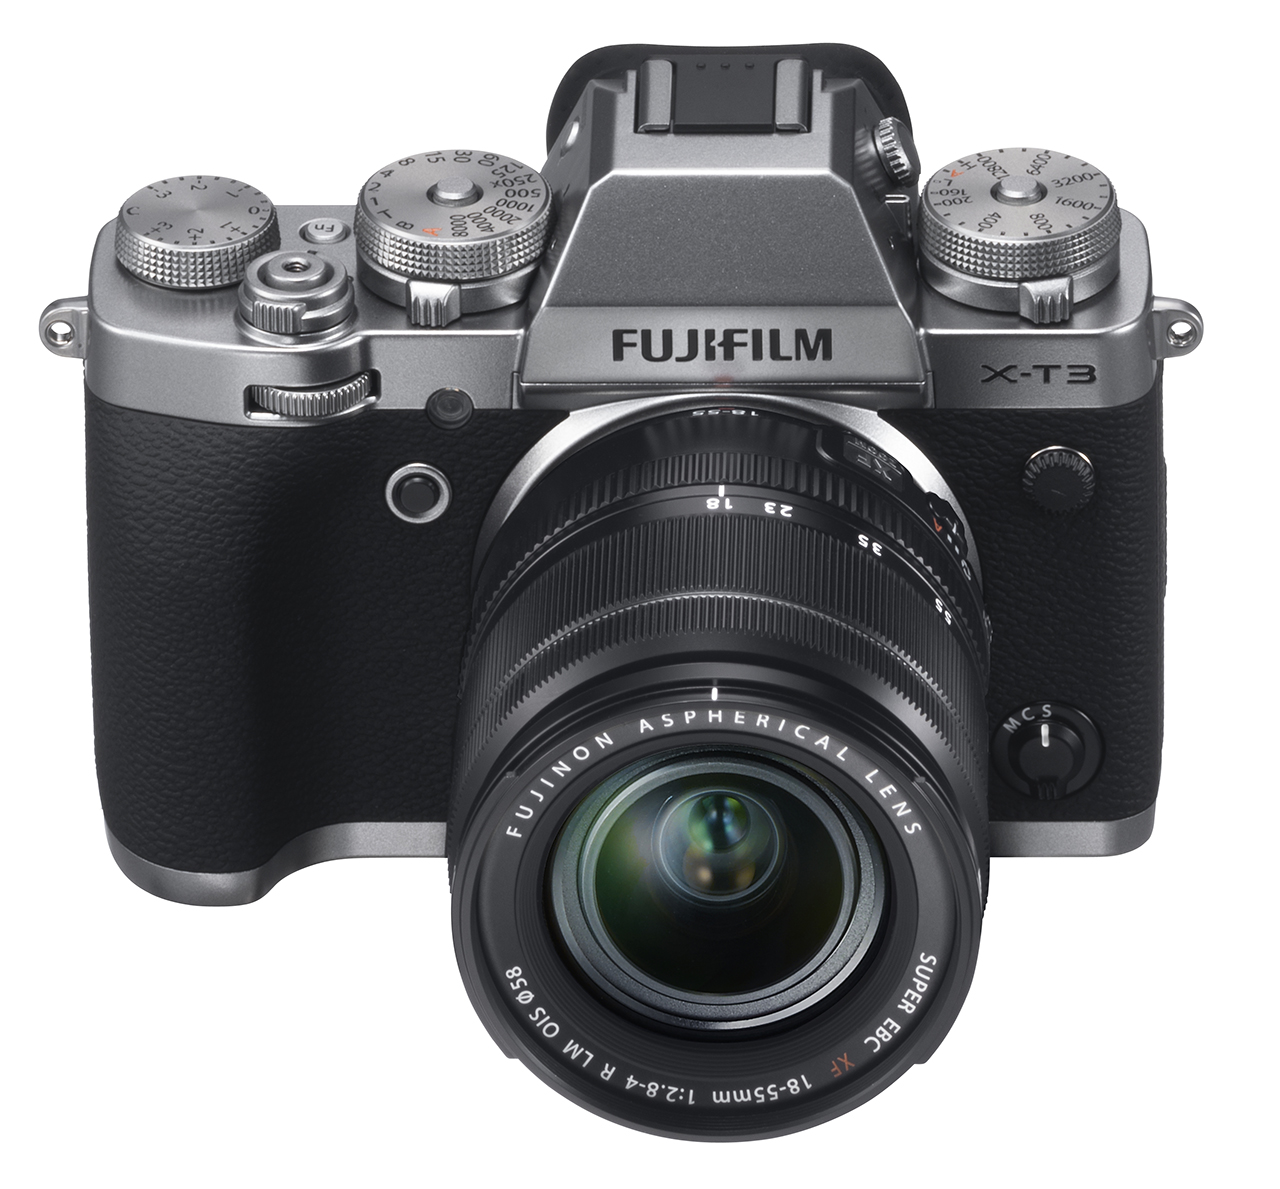 Fujifilm XT3 Review Photographic